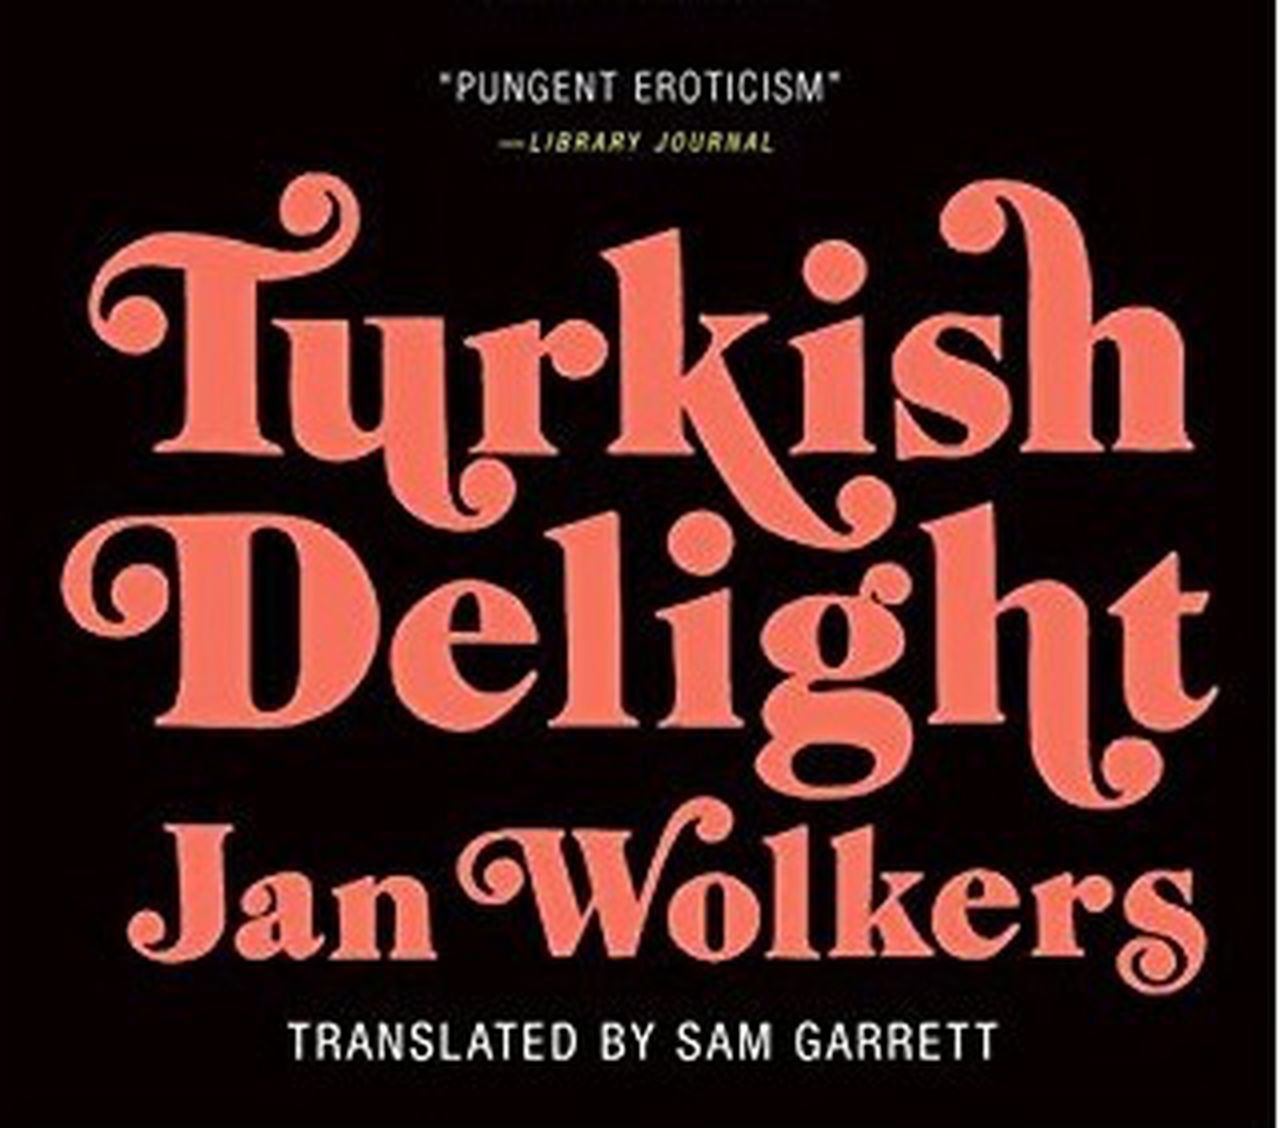 Guardian bewondert nieuwe vertaling Turks Fruit 